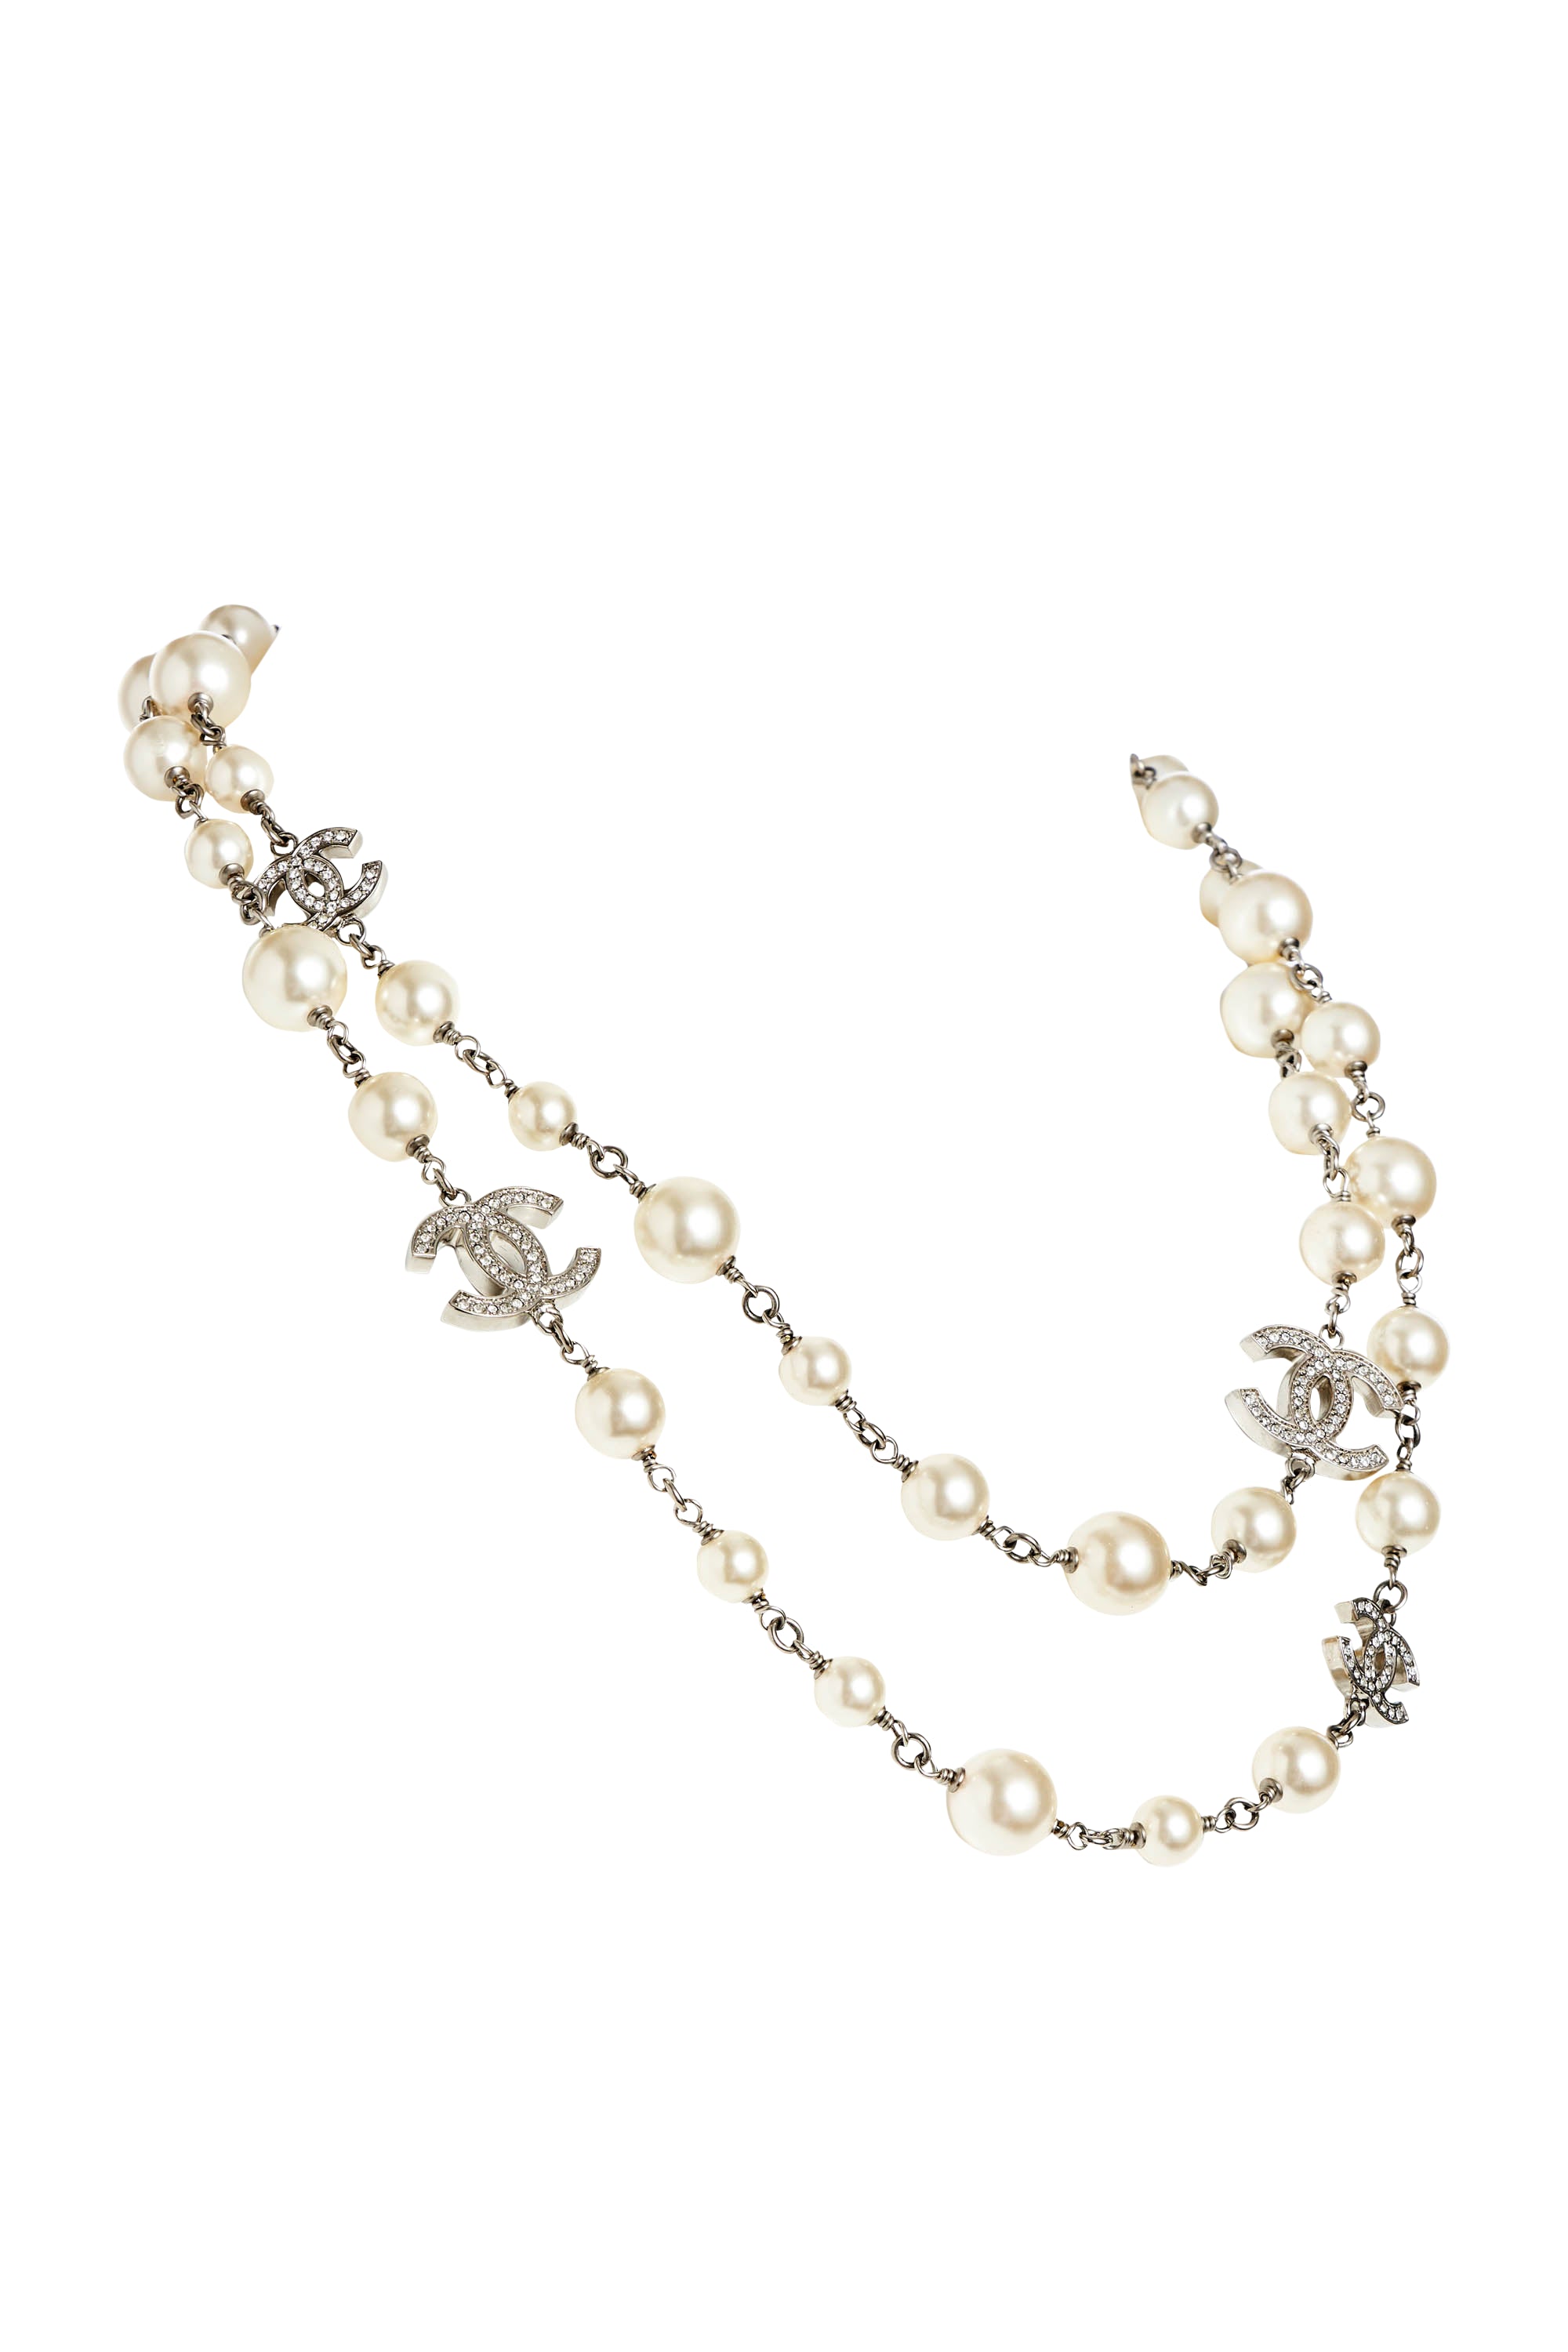 Chanel Pearl Silver Sautoir CC Necklace 17B